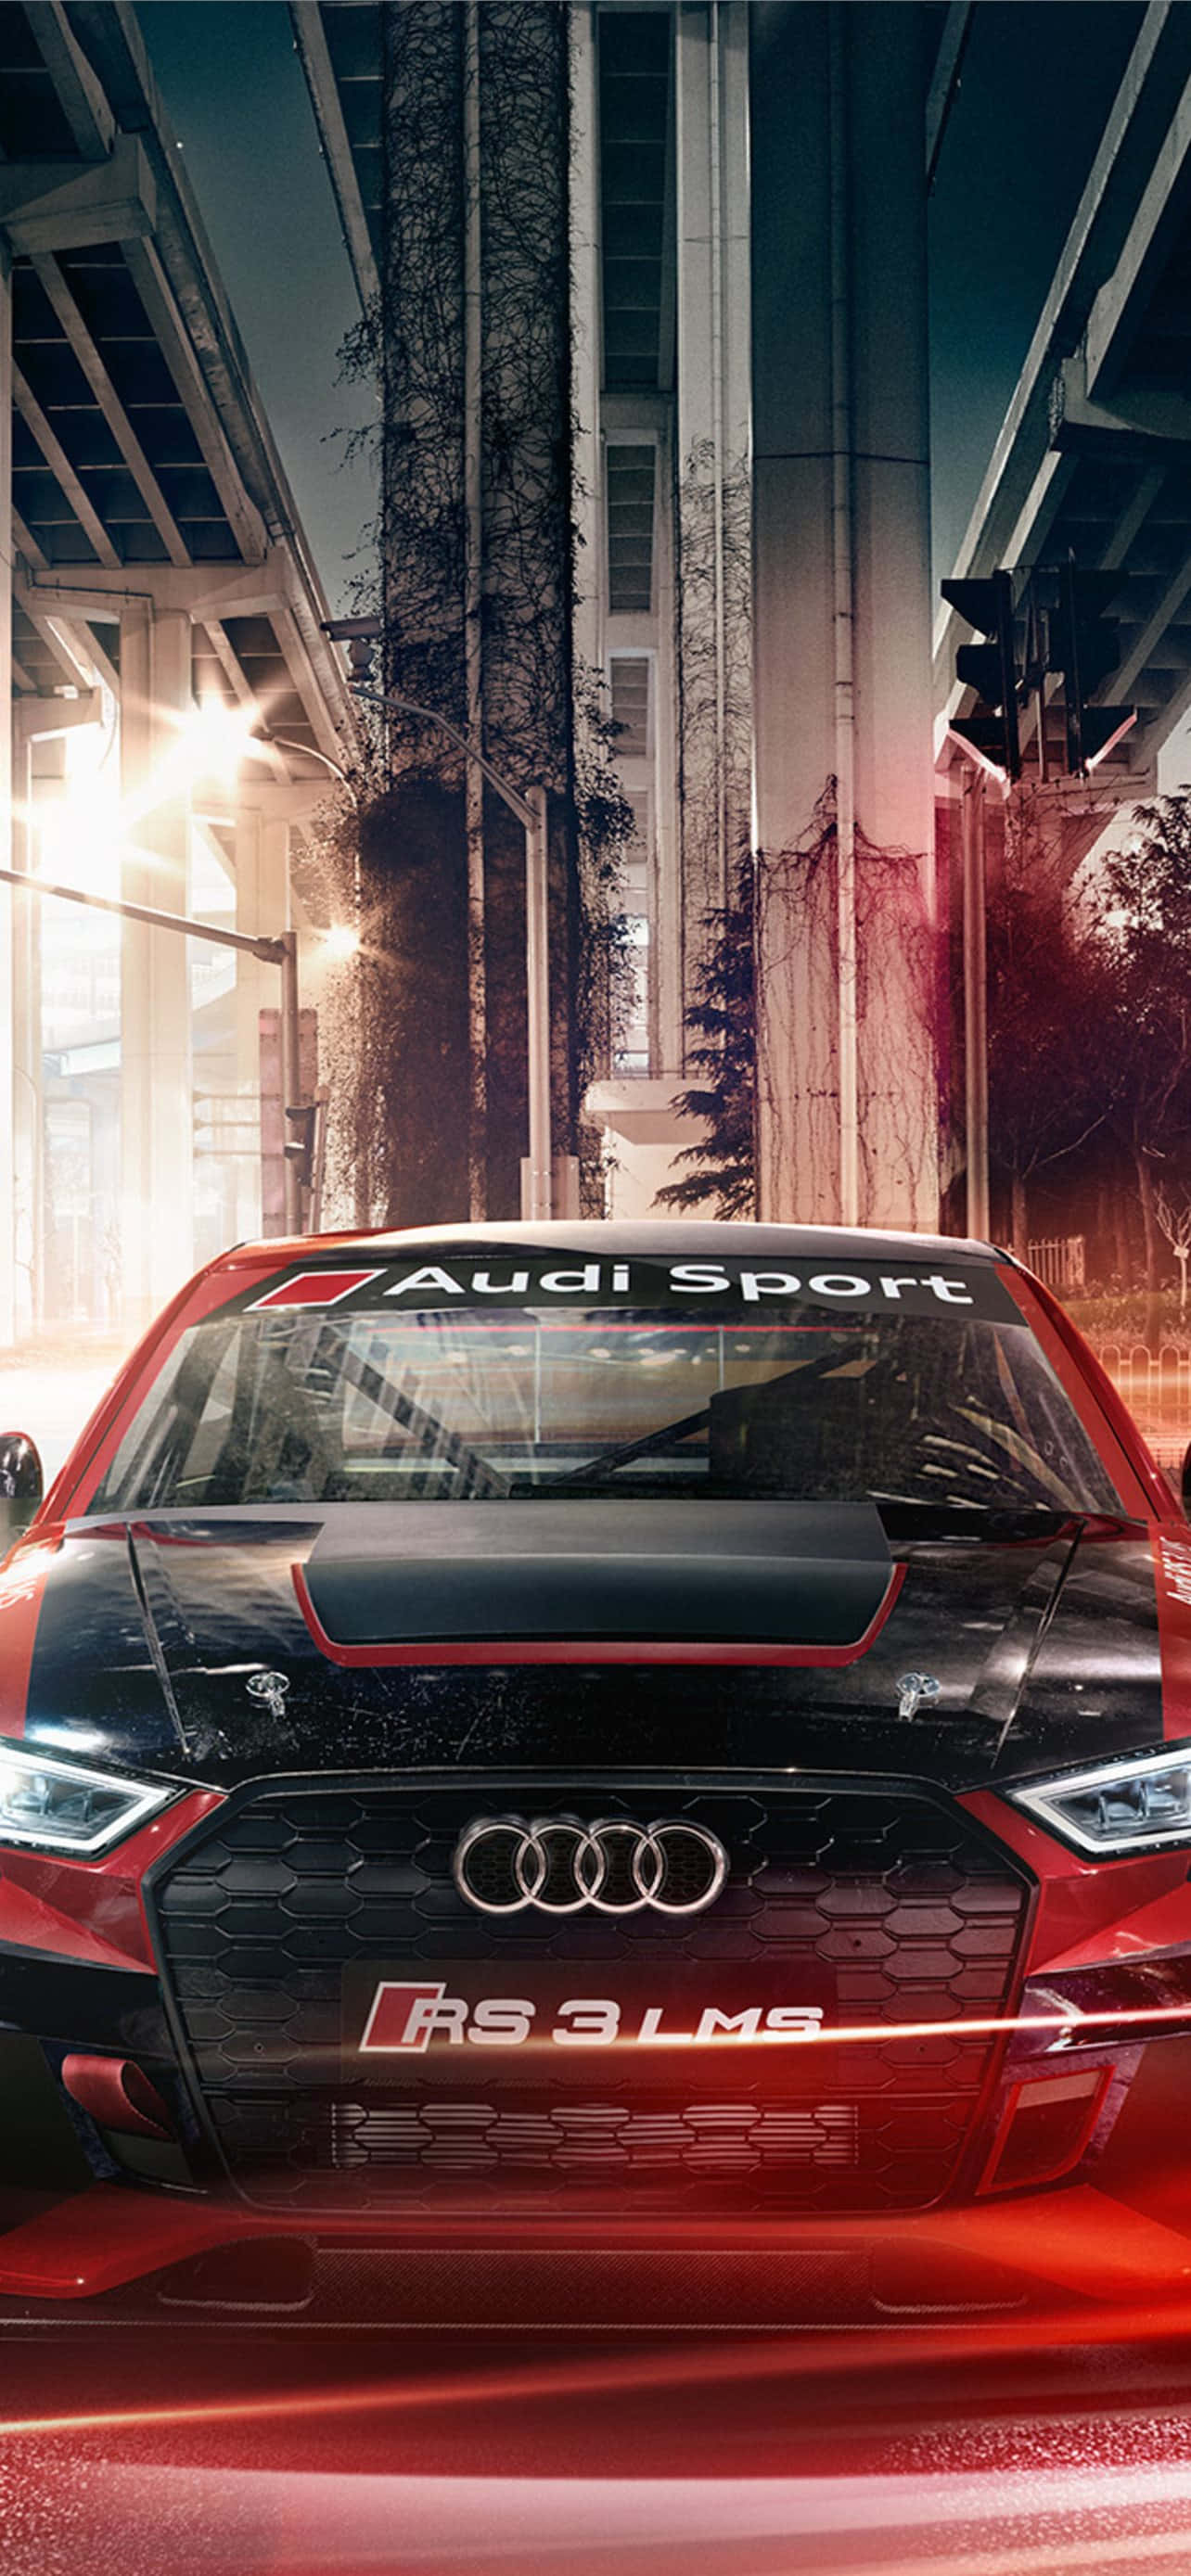 Audi Sportback Against a Night Cityscape